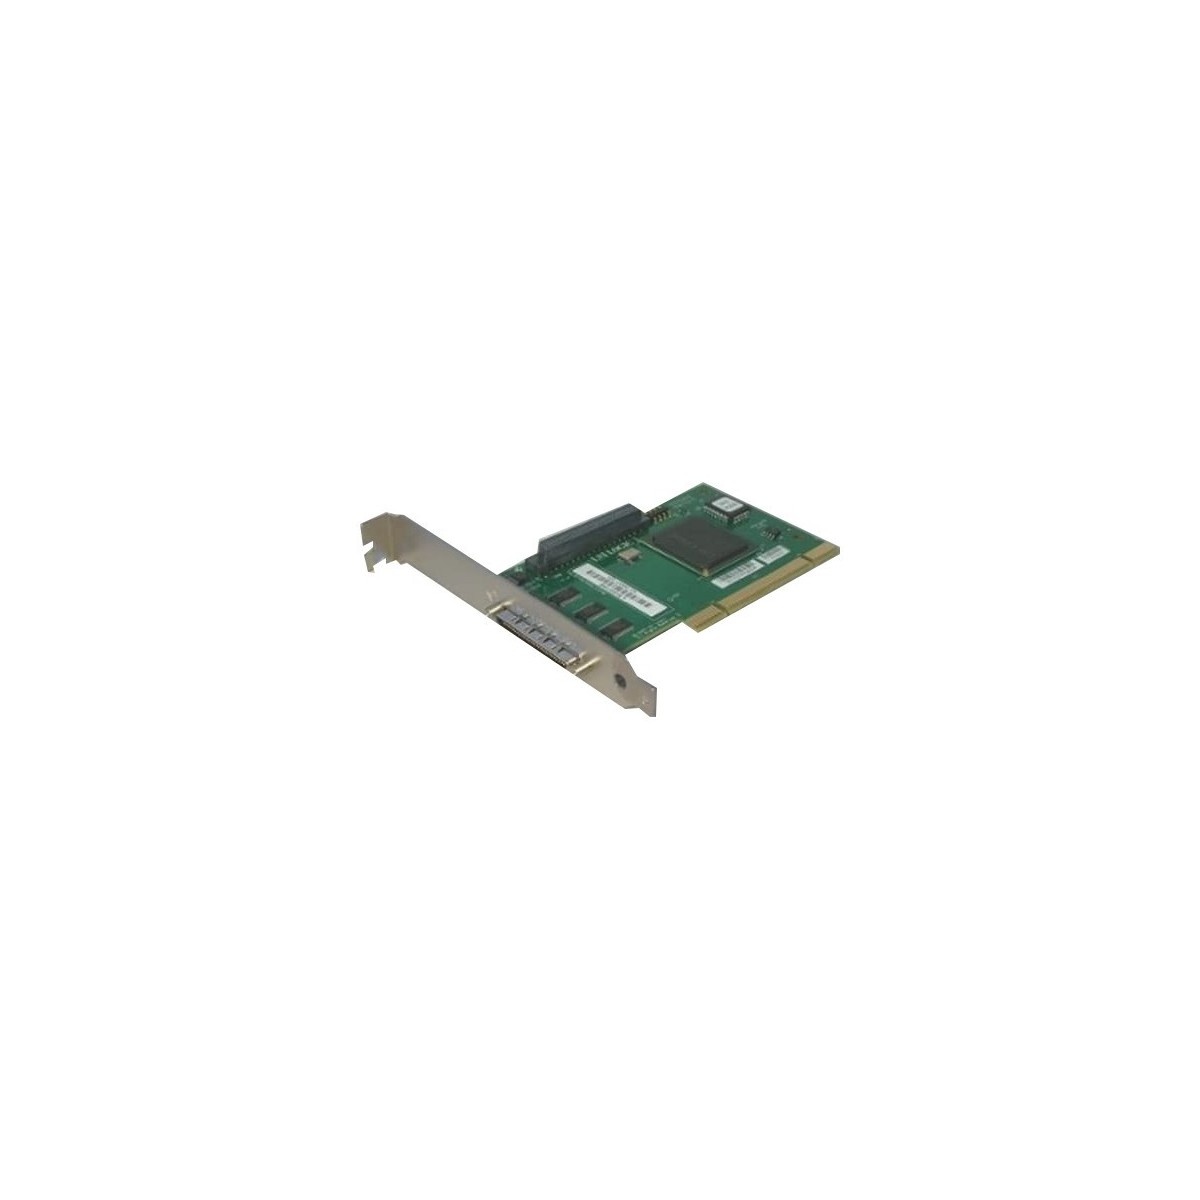 LSI LOGIC LSI20160 PCI ULTRA160 SCSI VHDCI 68